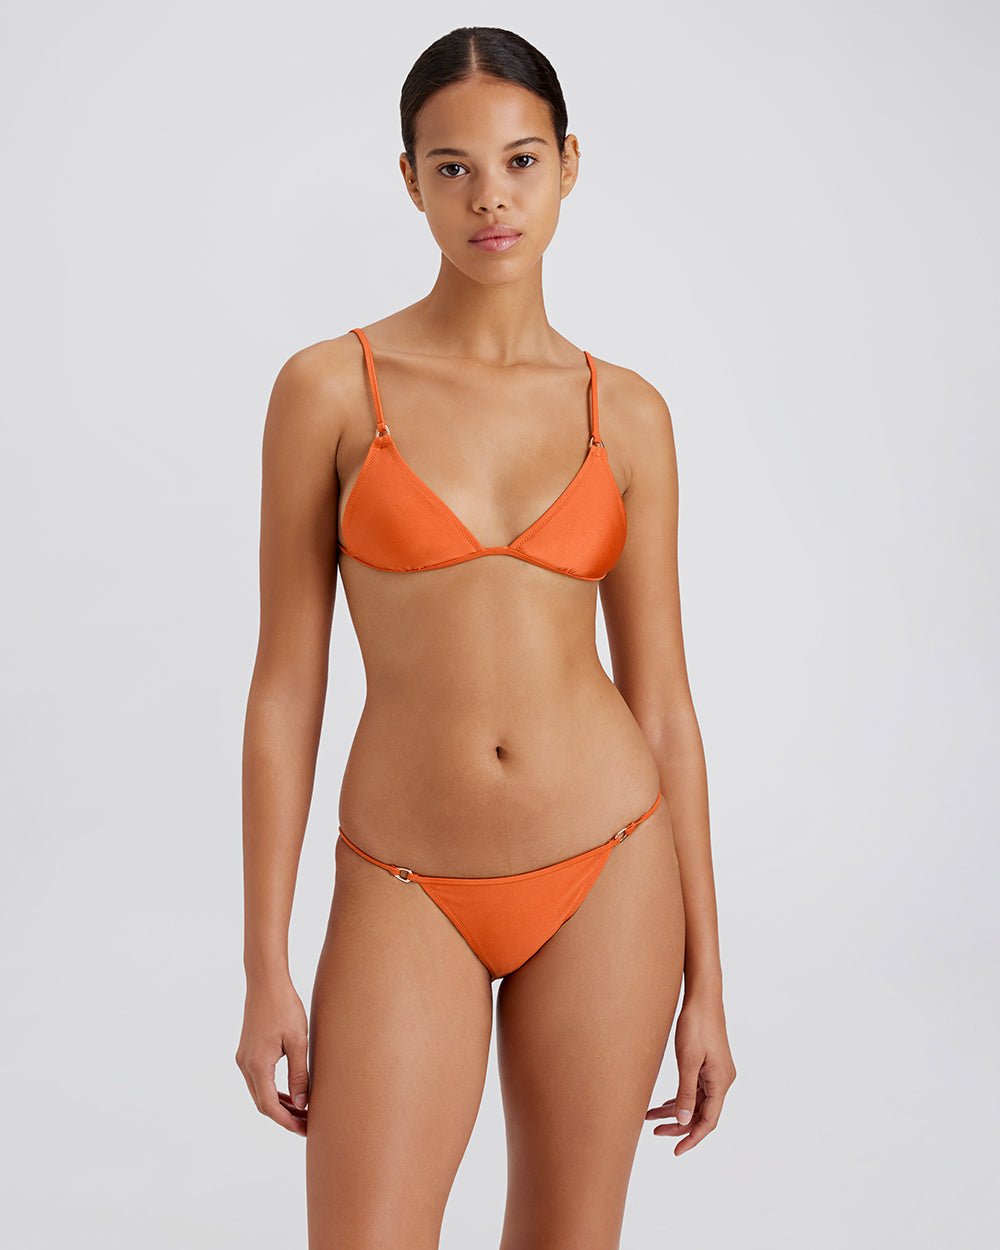 Solid - Solid Bandeau Bikini Top for Women